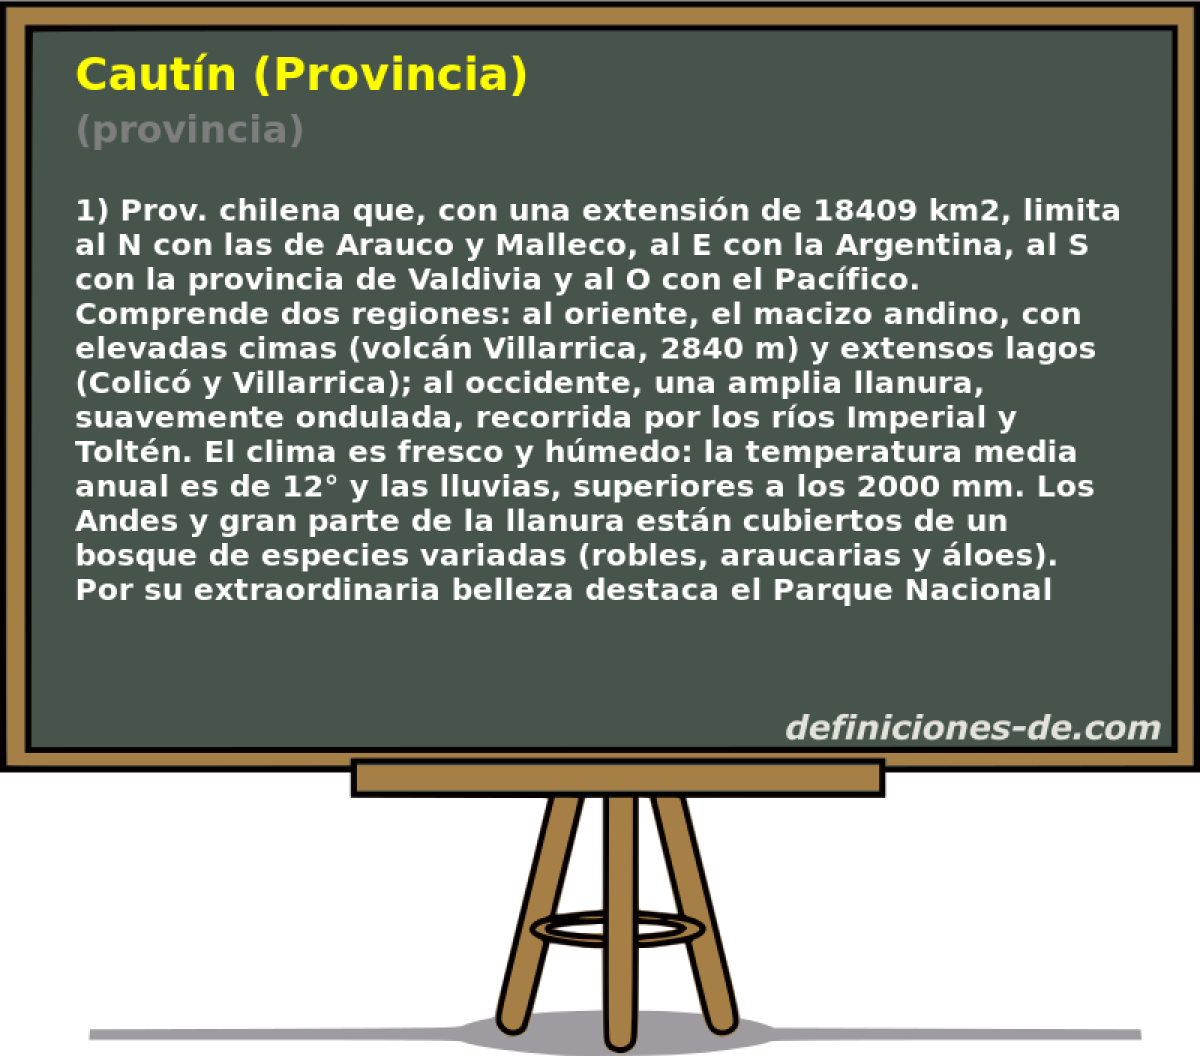 Cautn (Provincia) (provincia)